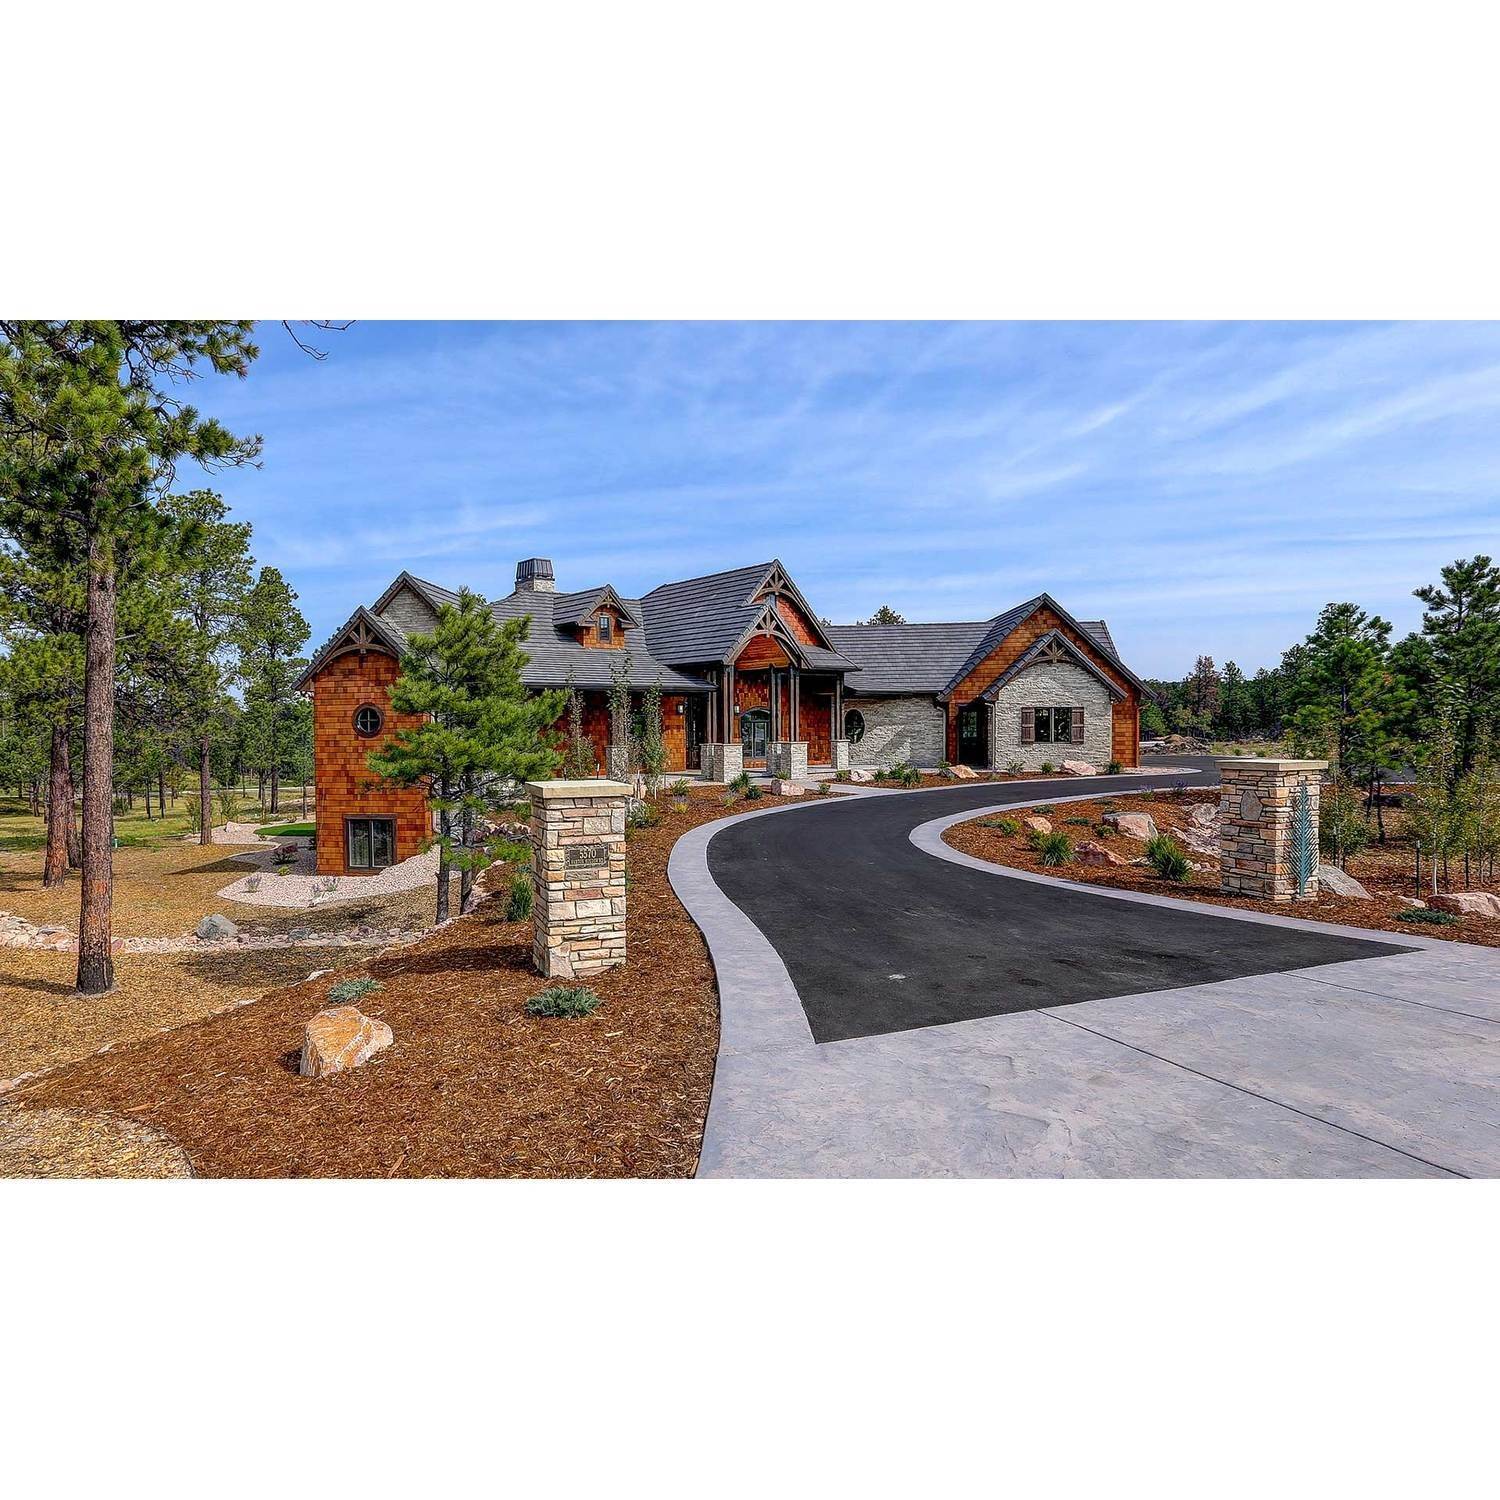 34. Galiant Homes building at 4783 Farmingdale Dr, Colorado Springs, CO 80918